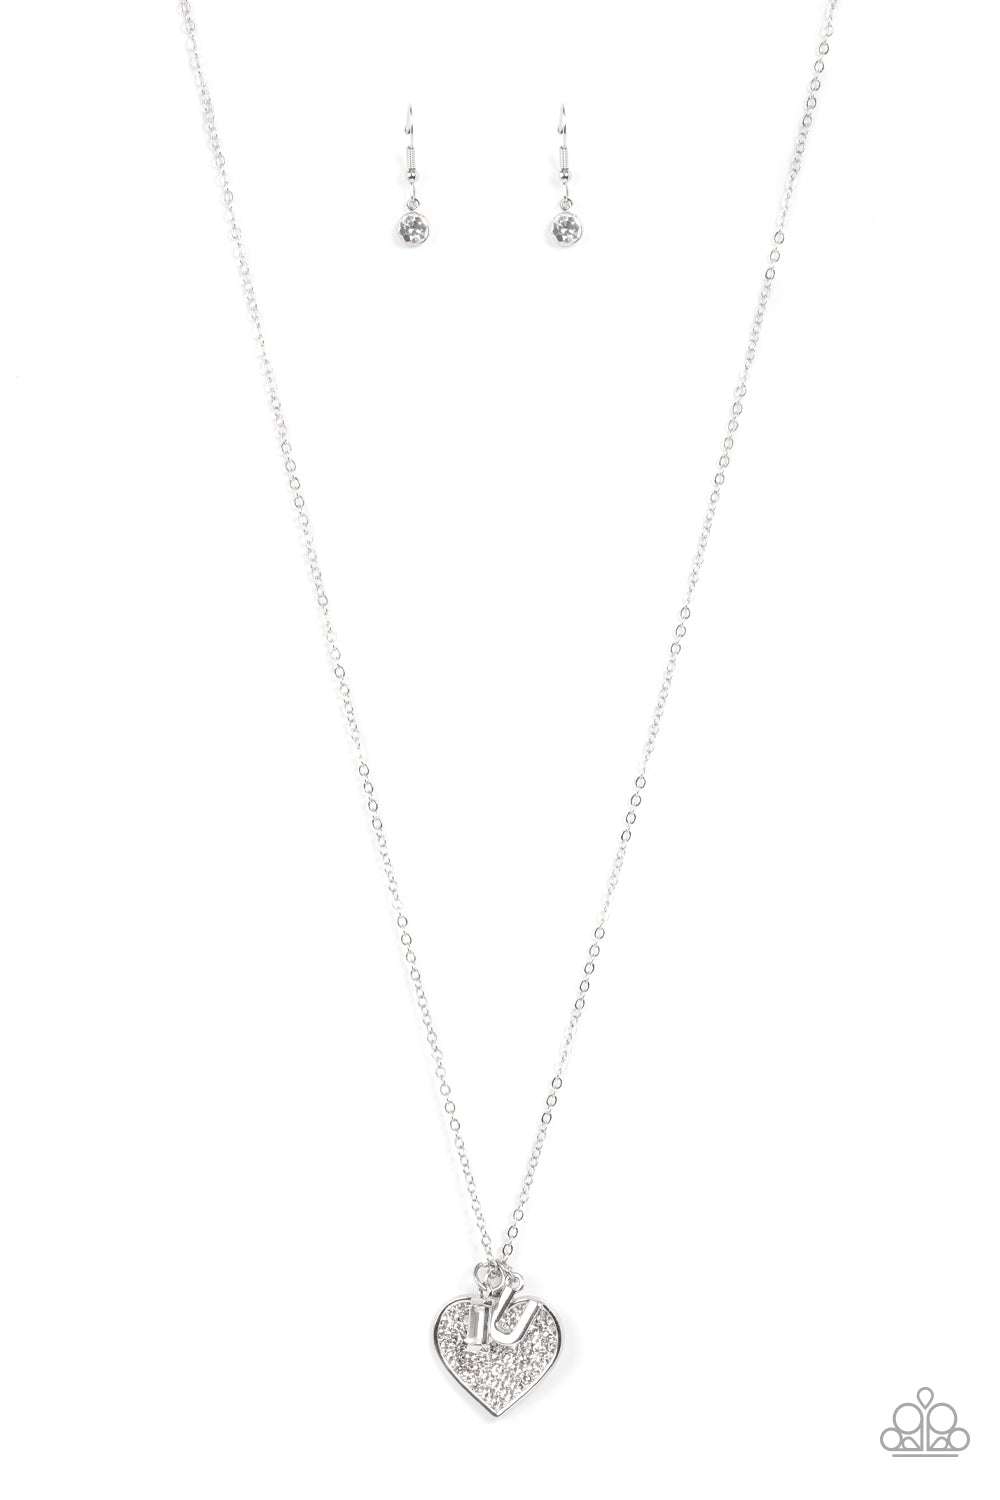 heart necklace silver white rhinestone valentines day gift. holiday gift, birthday gift